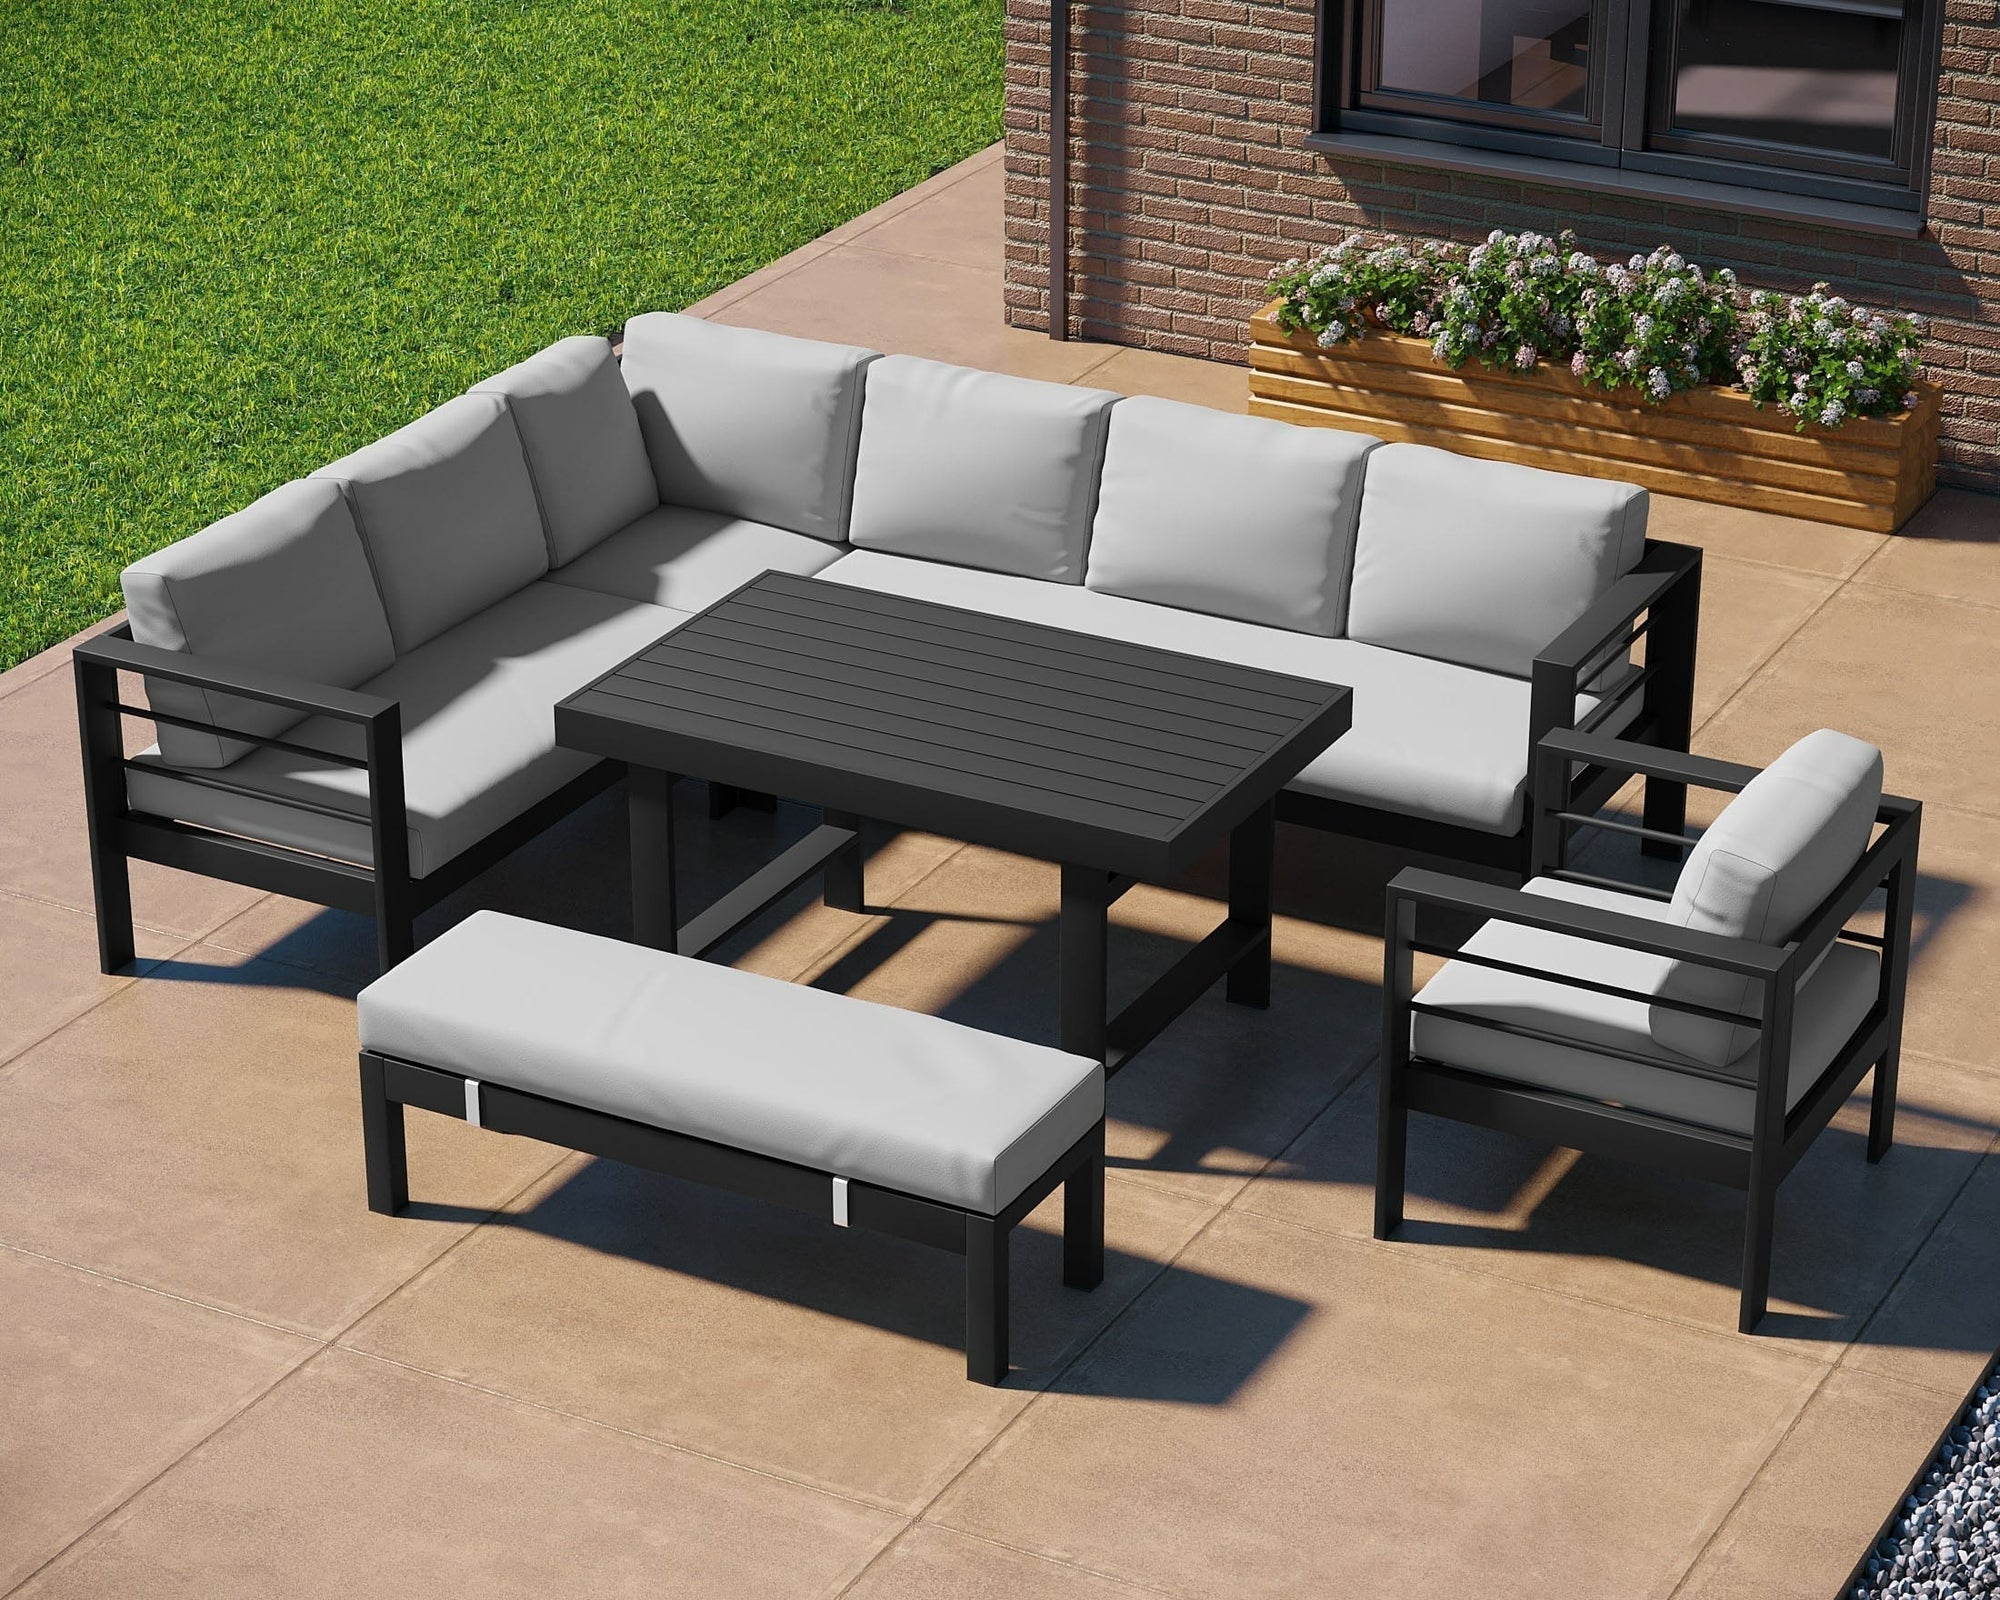 Aluminium Right Hand Corner Sofa / Outdoor Garden Dining Set in Black and Grey Rattan Furniture MaxiFurn 